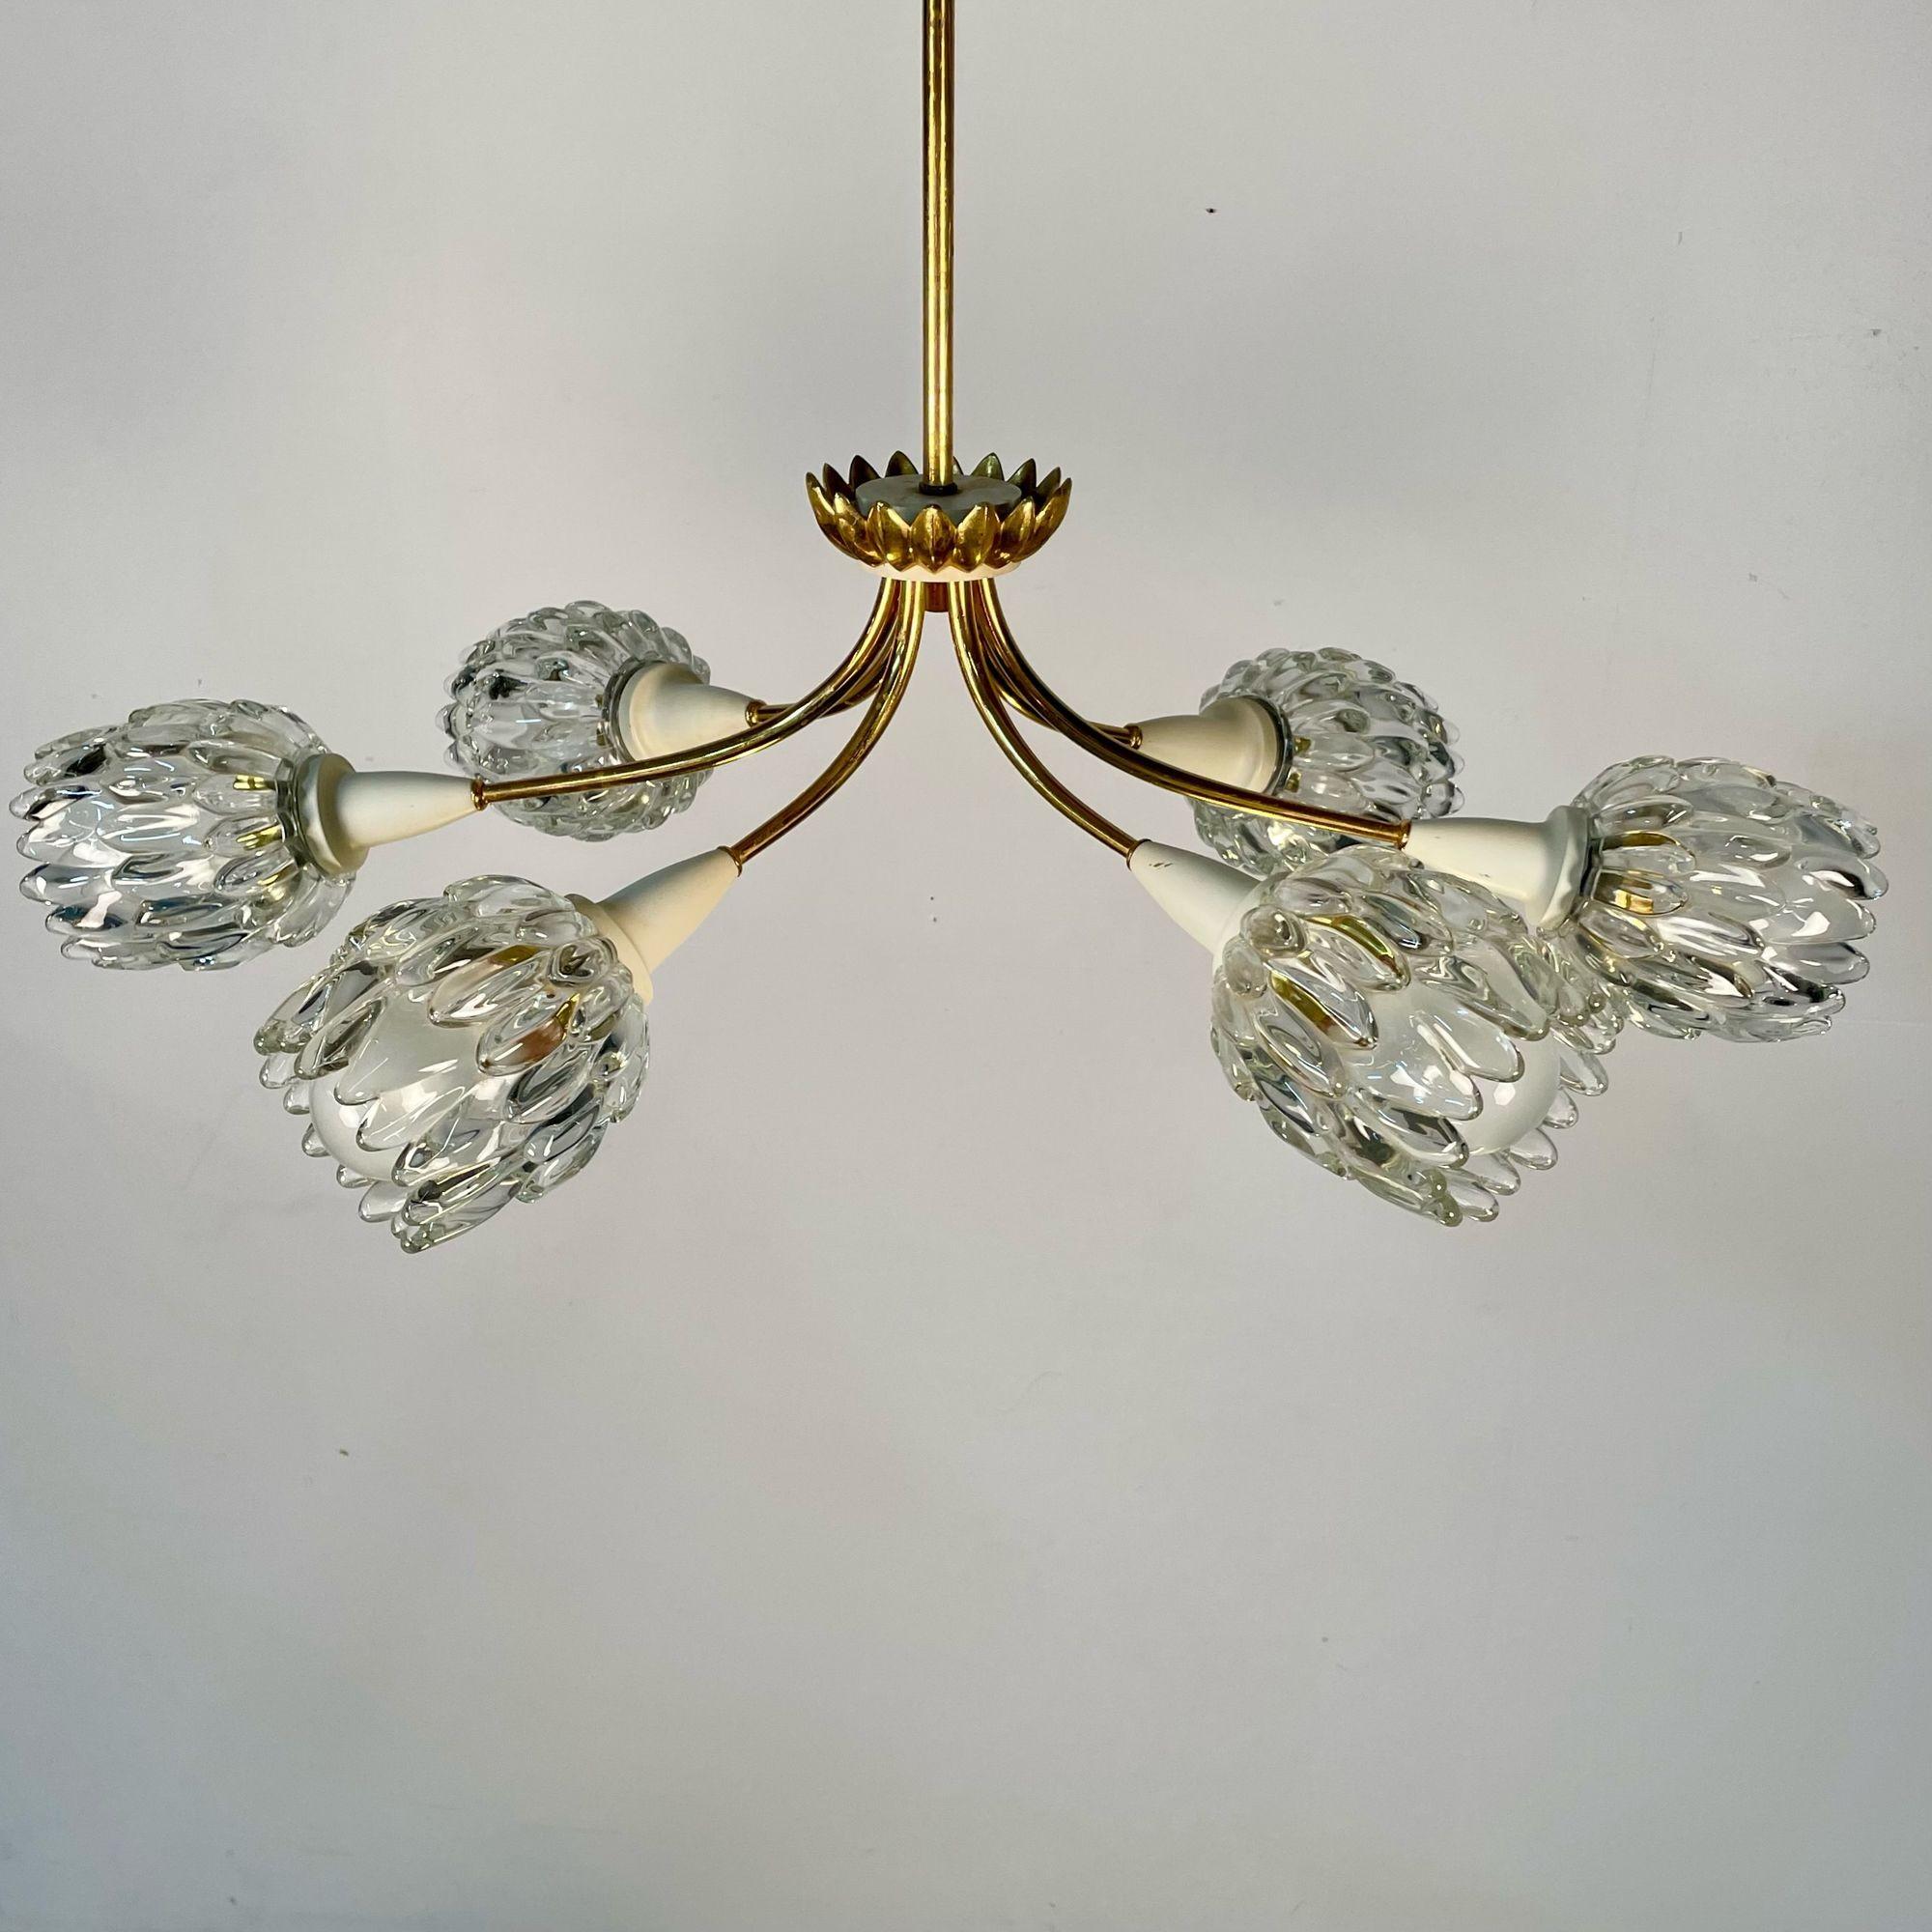 Italian Mid-Century Modern, Six Light Chandelier, Textured Glass, Brass, Italy, 1980s For Sale